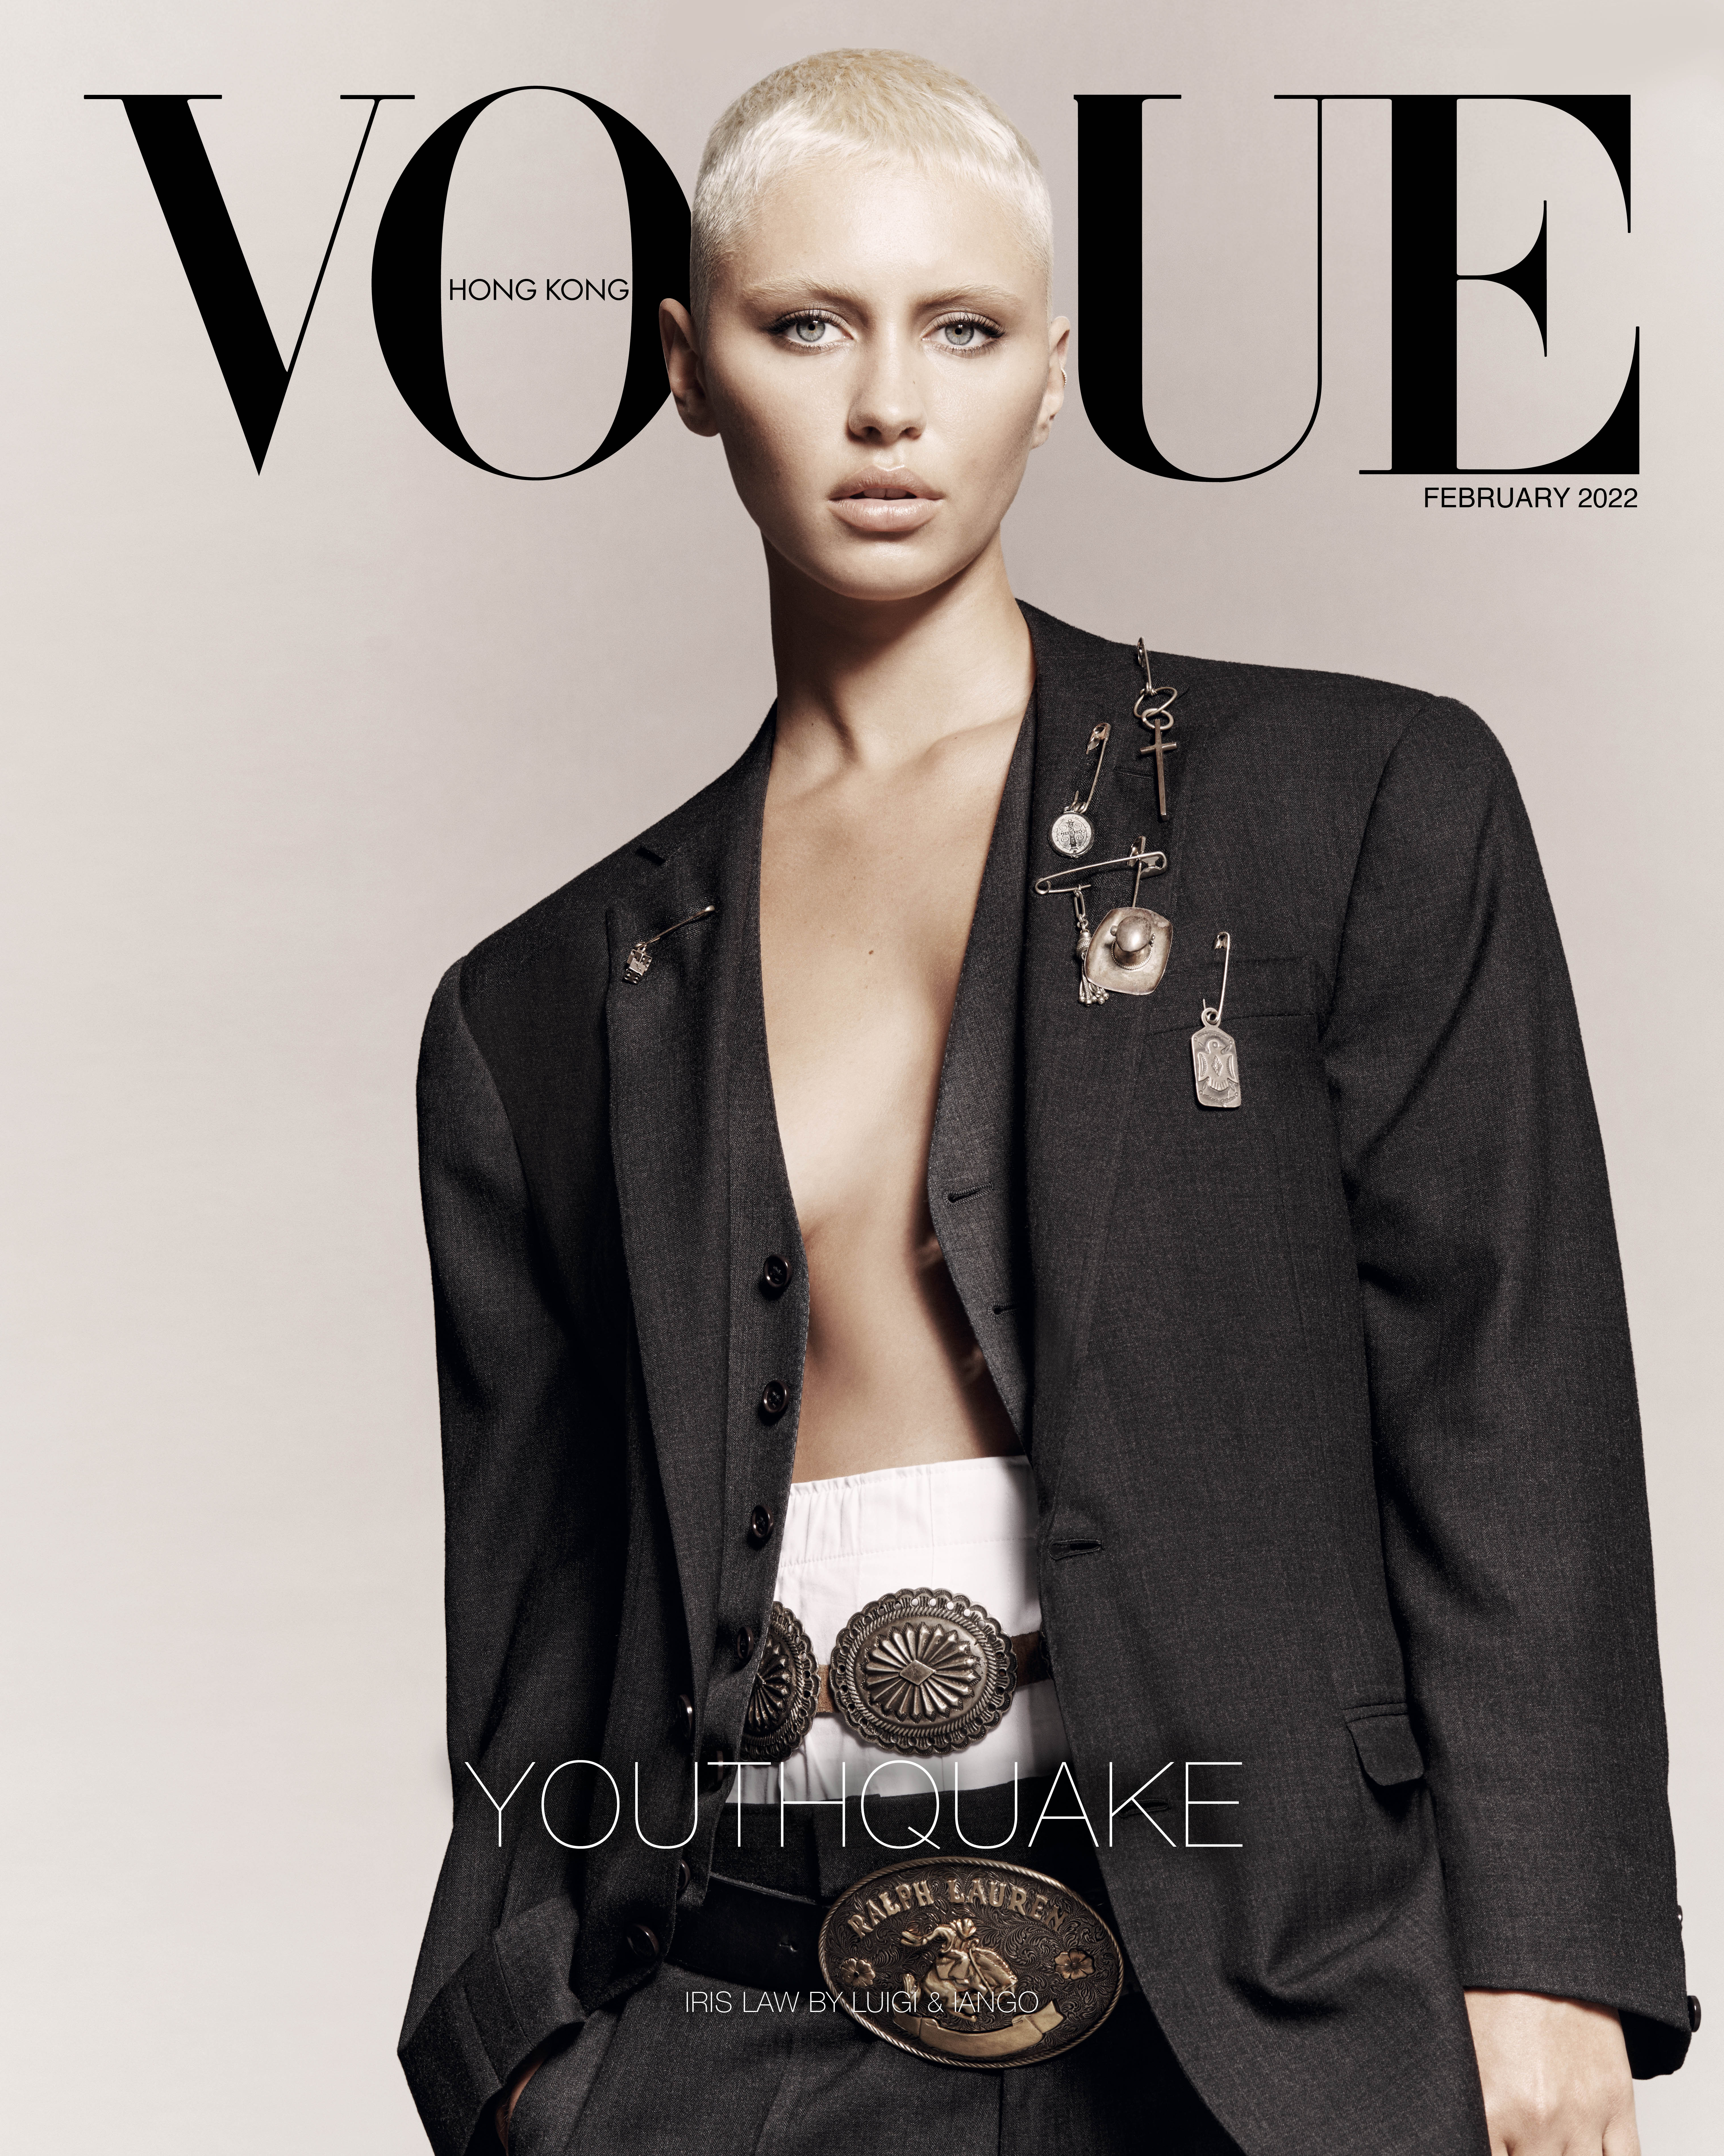 Louis Vuitton - VO+ Jewels & Luxury Magazine